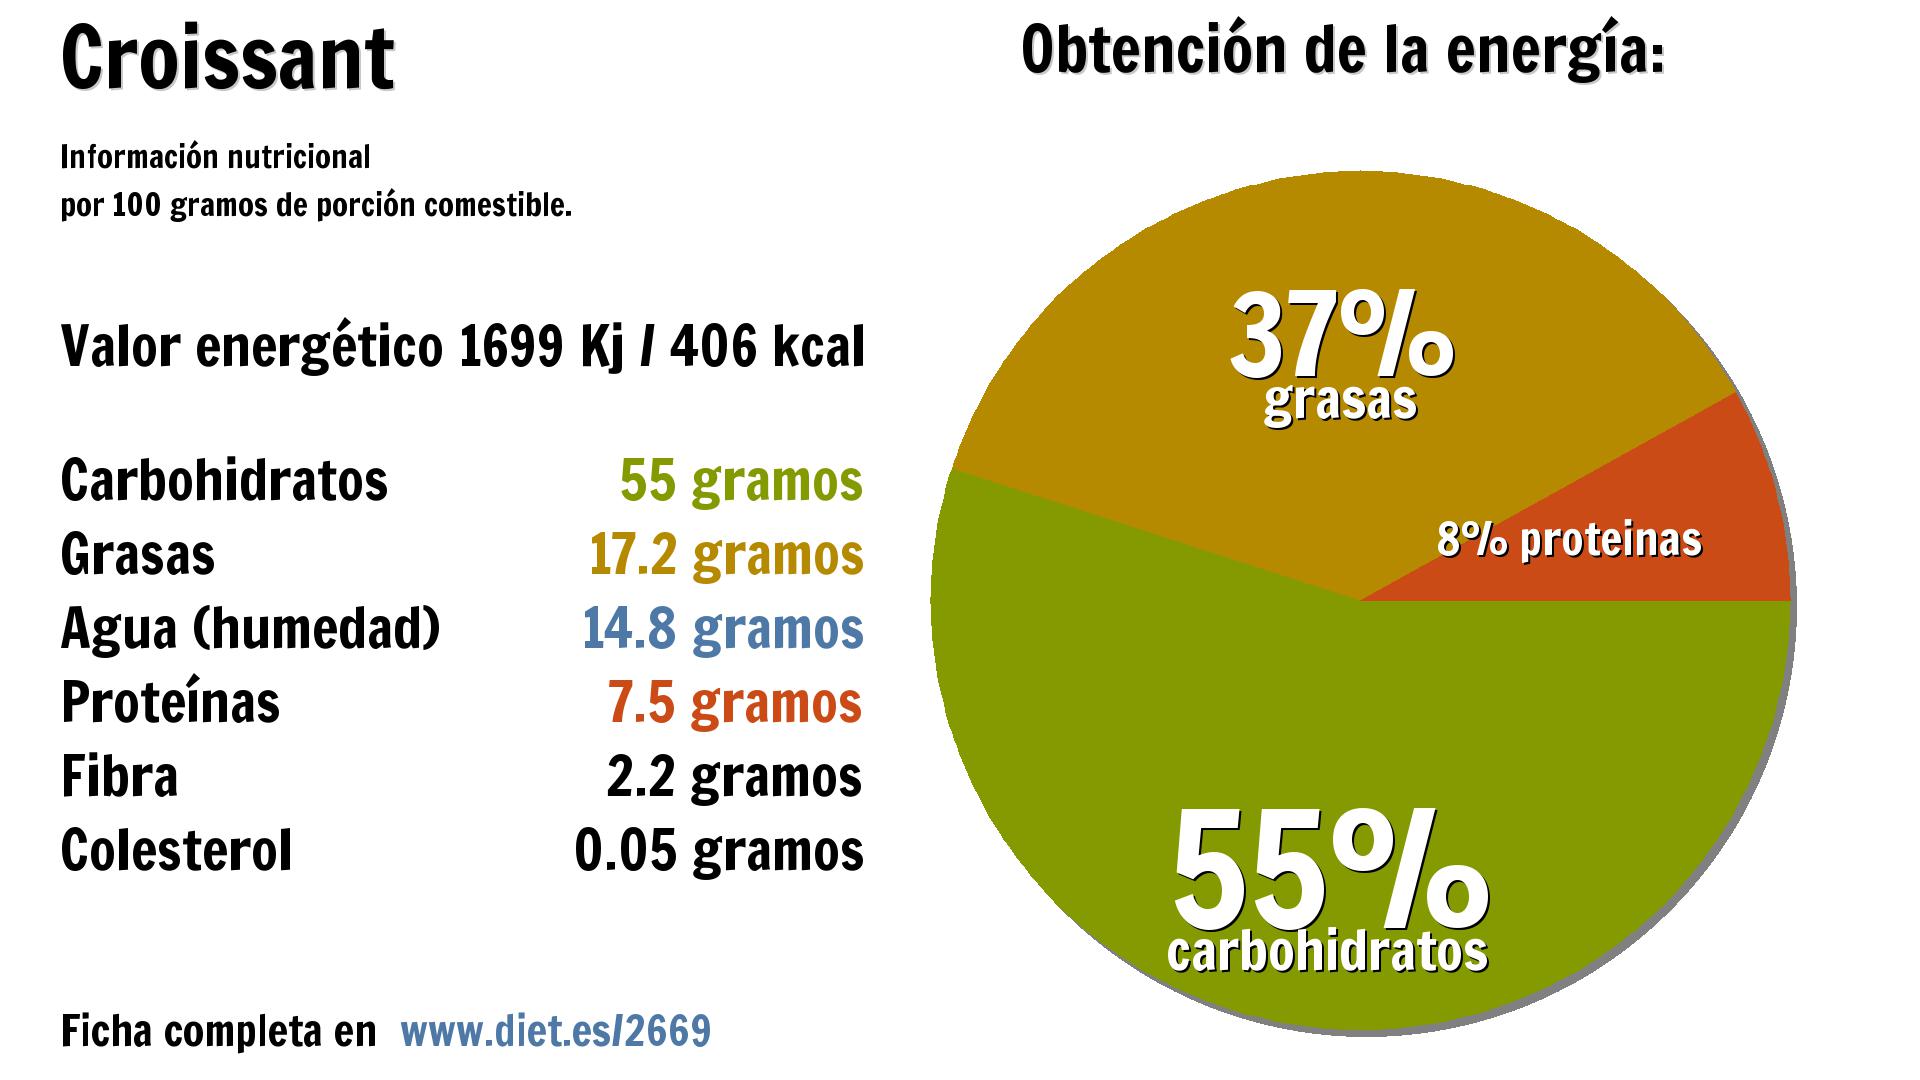 Croissant: energía 1699 Kj, carbohidratos 55 g., grasas 17 g., agua 15 g., proteínas 8 g. y fibra 2 g.